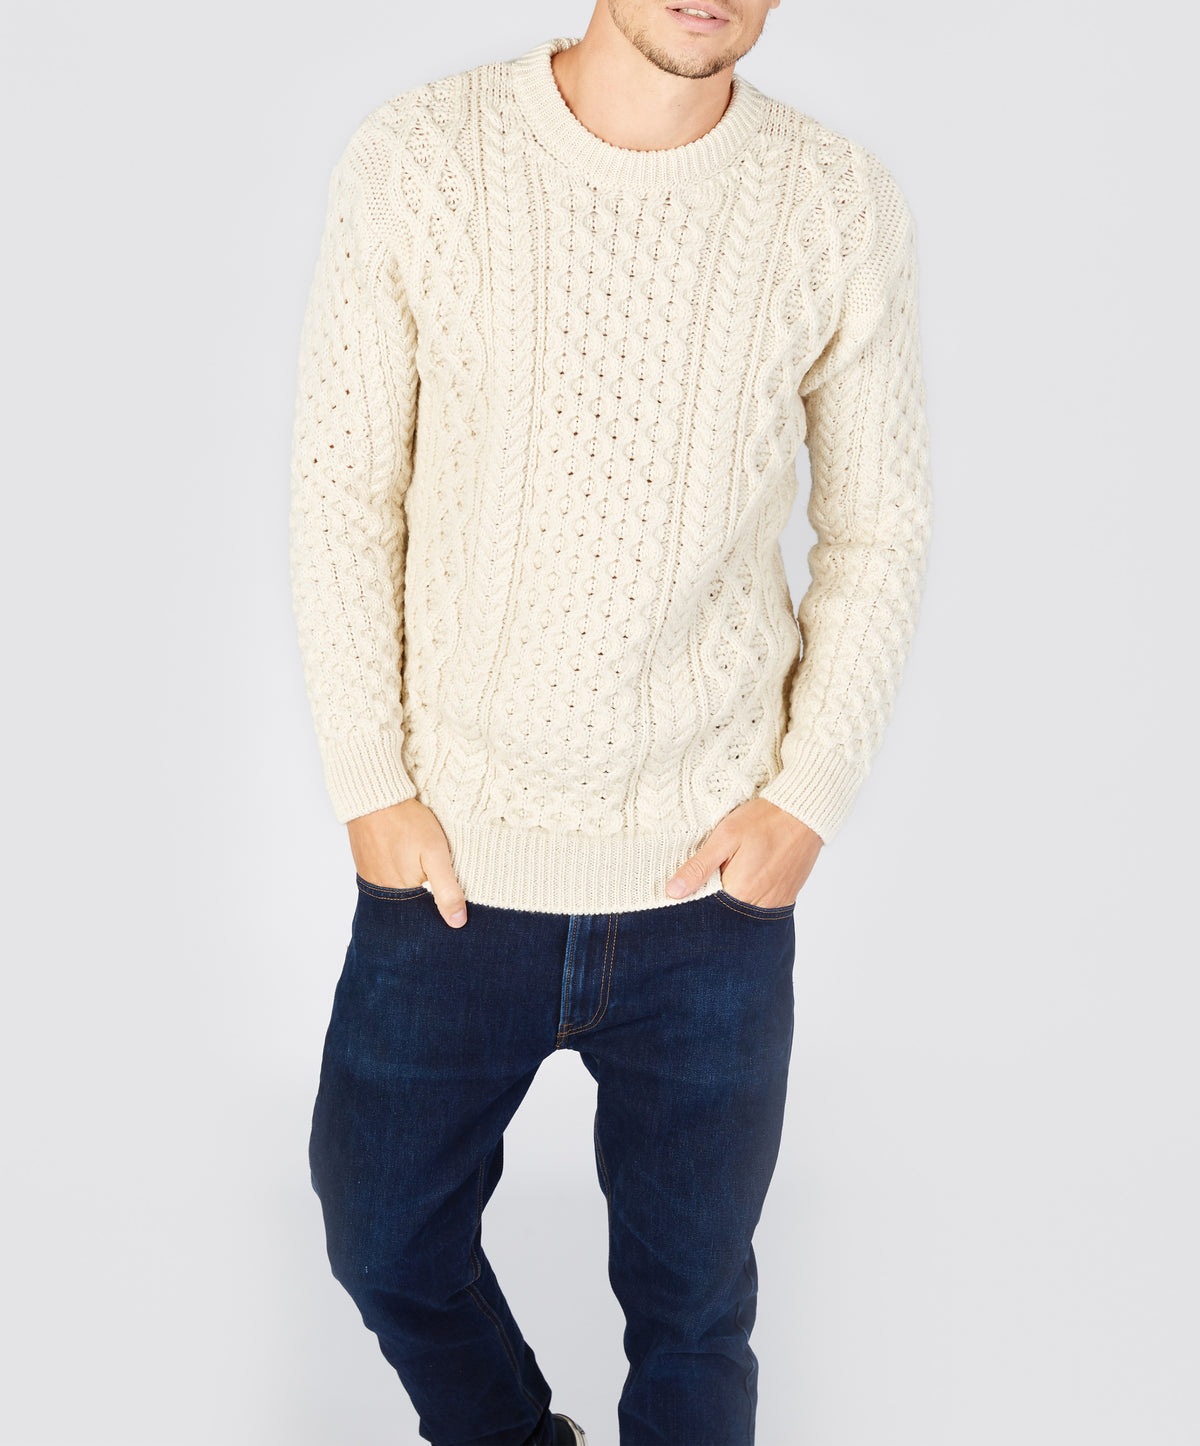 IrelandsEye Knitwear Blasket Honeycomb Stitch Mens Aran Sweater Natural